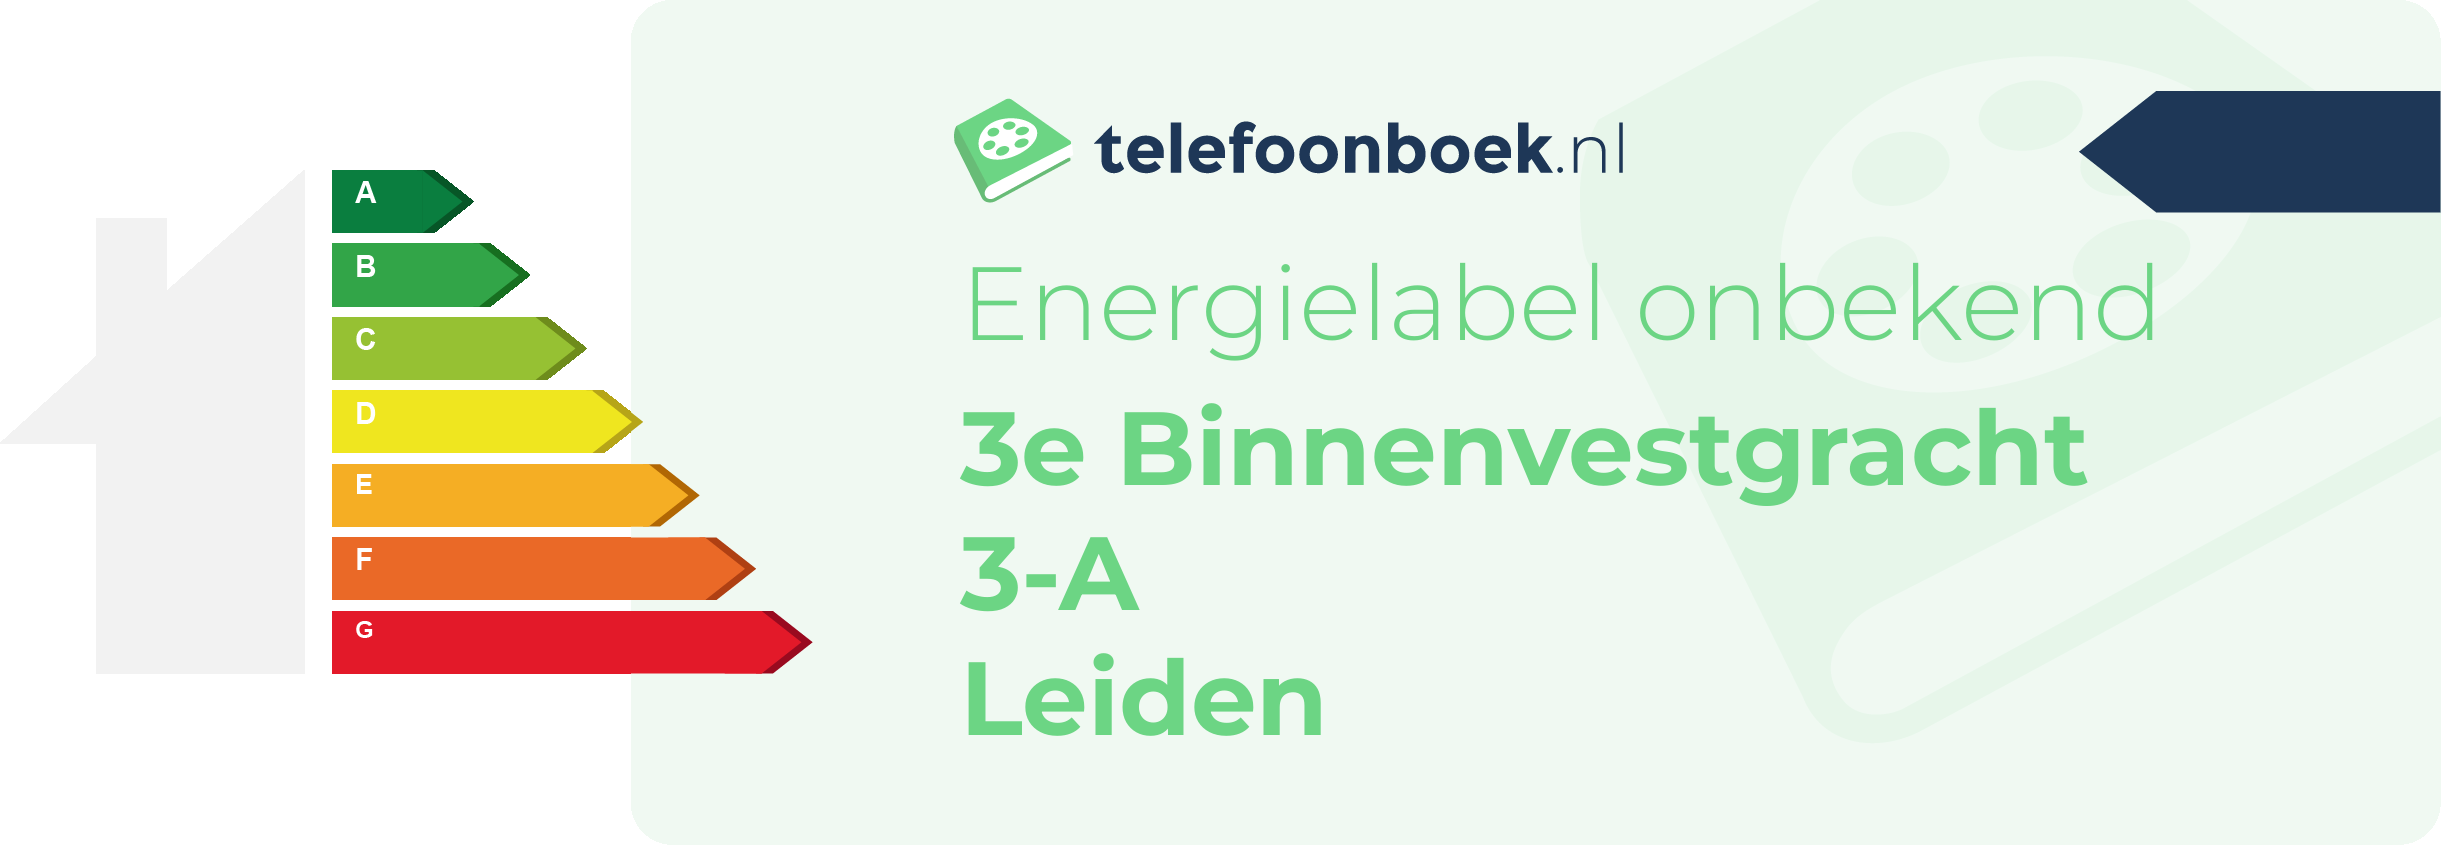 Energielabel 3e Binnenvestgracht 3-A Leiden